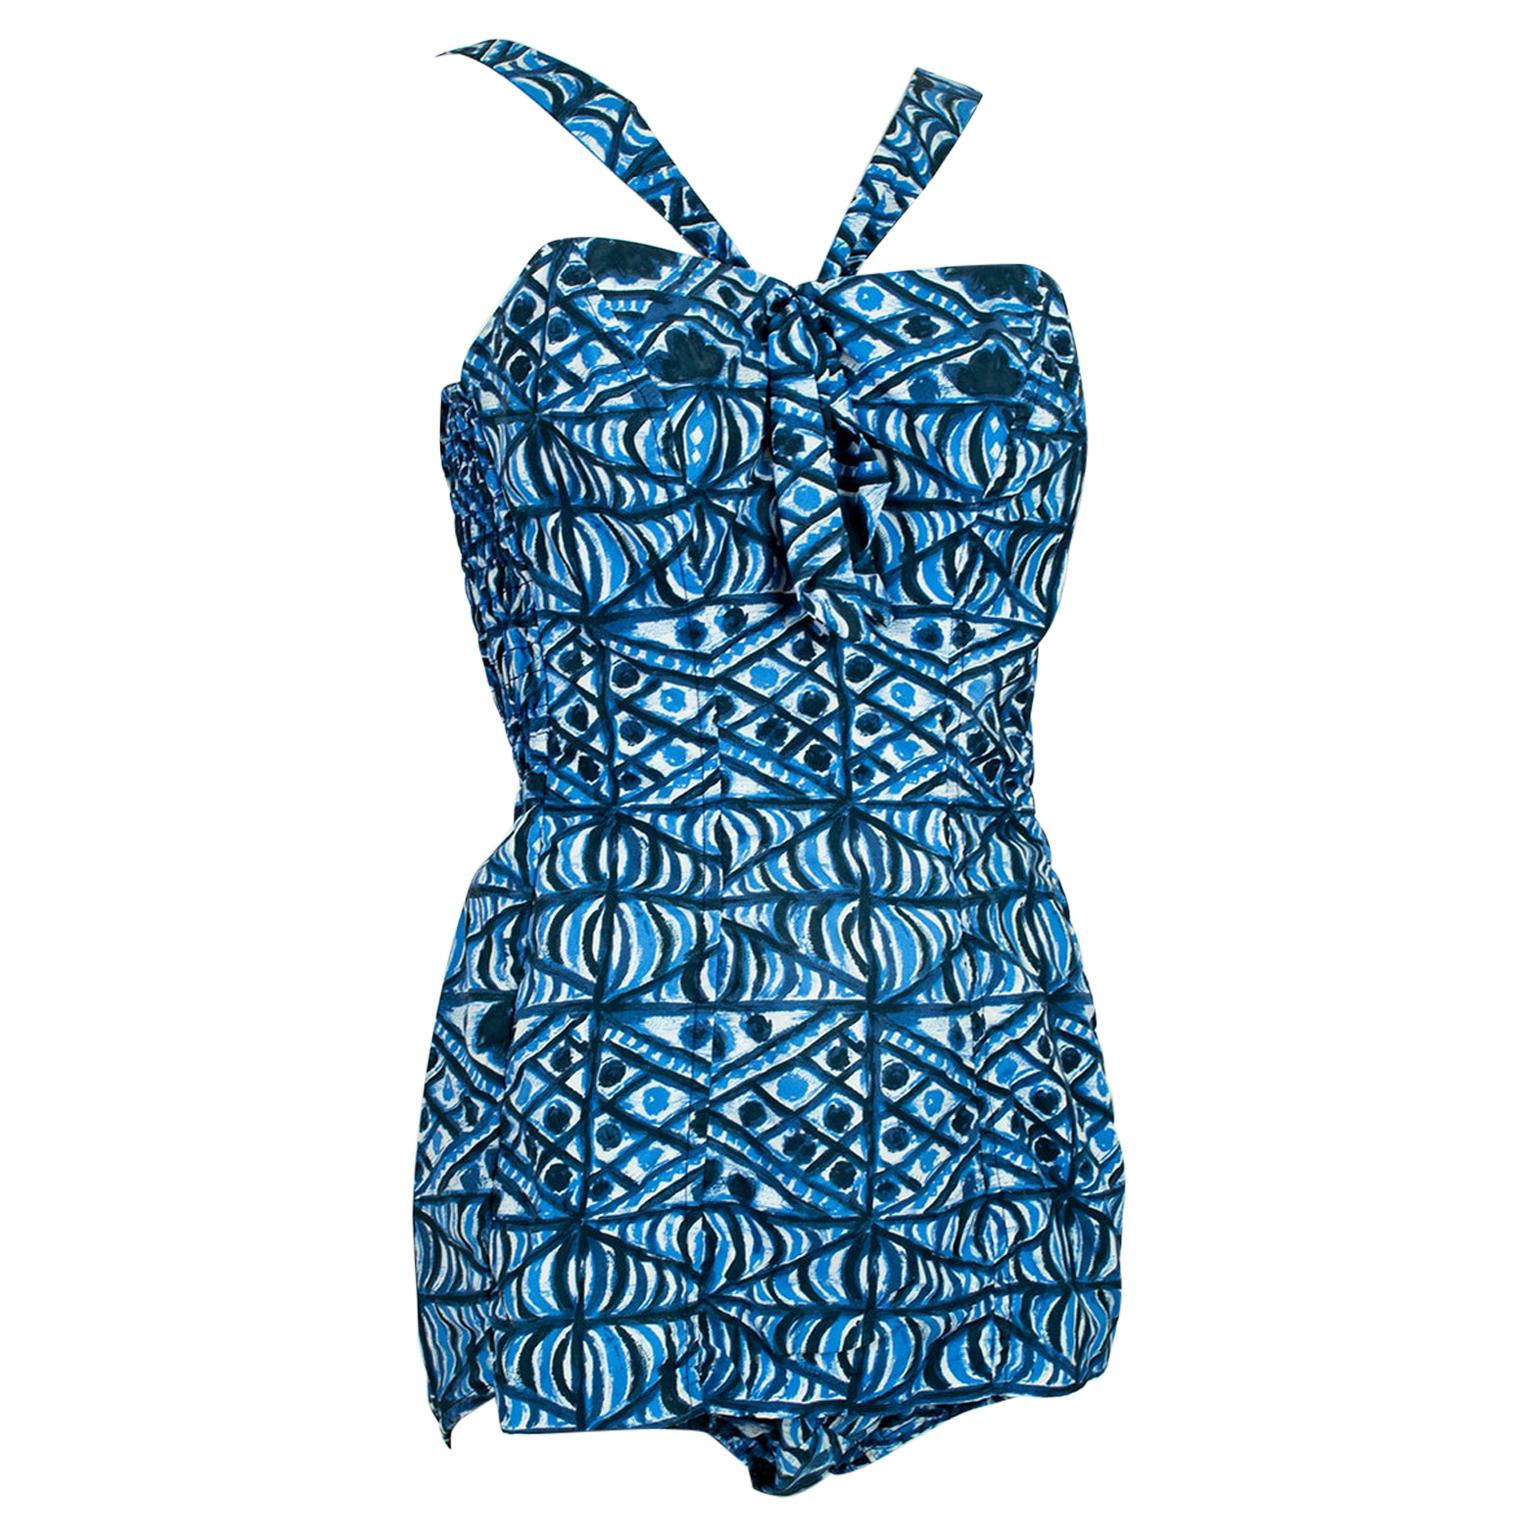 Jantzen Diving Girl Backless Blue Tiki Play Suit Swimsuit Beach Romper– M, 1950s